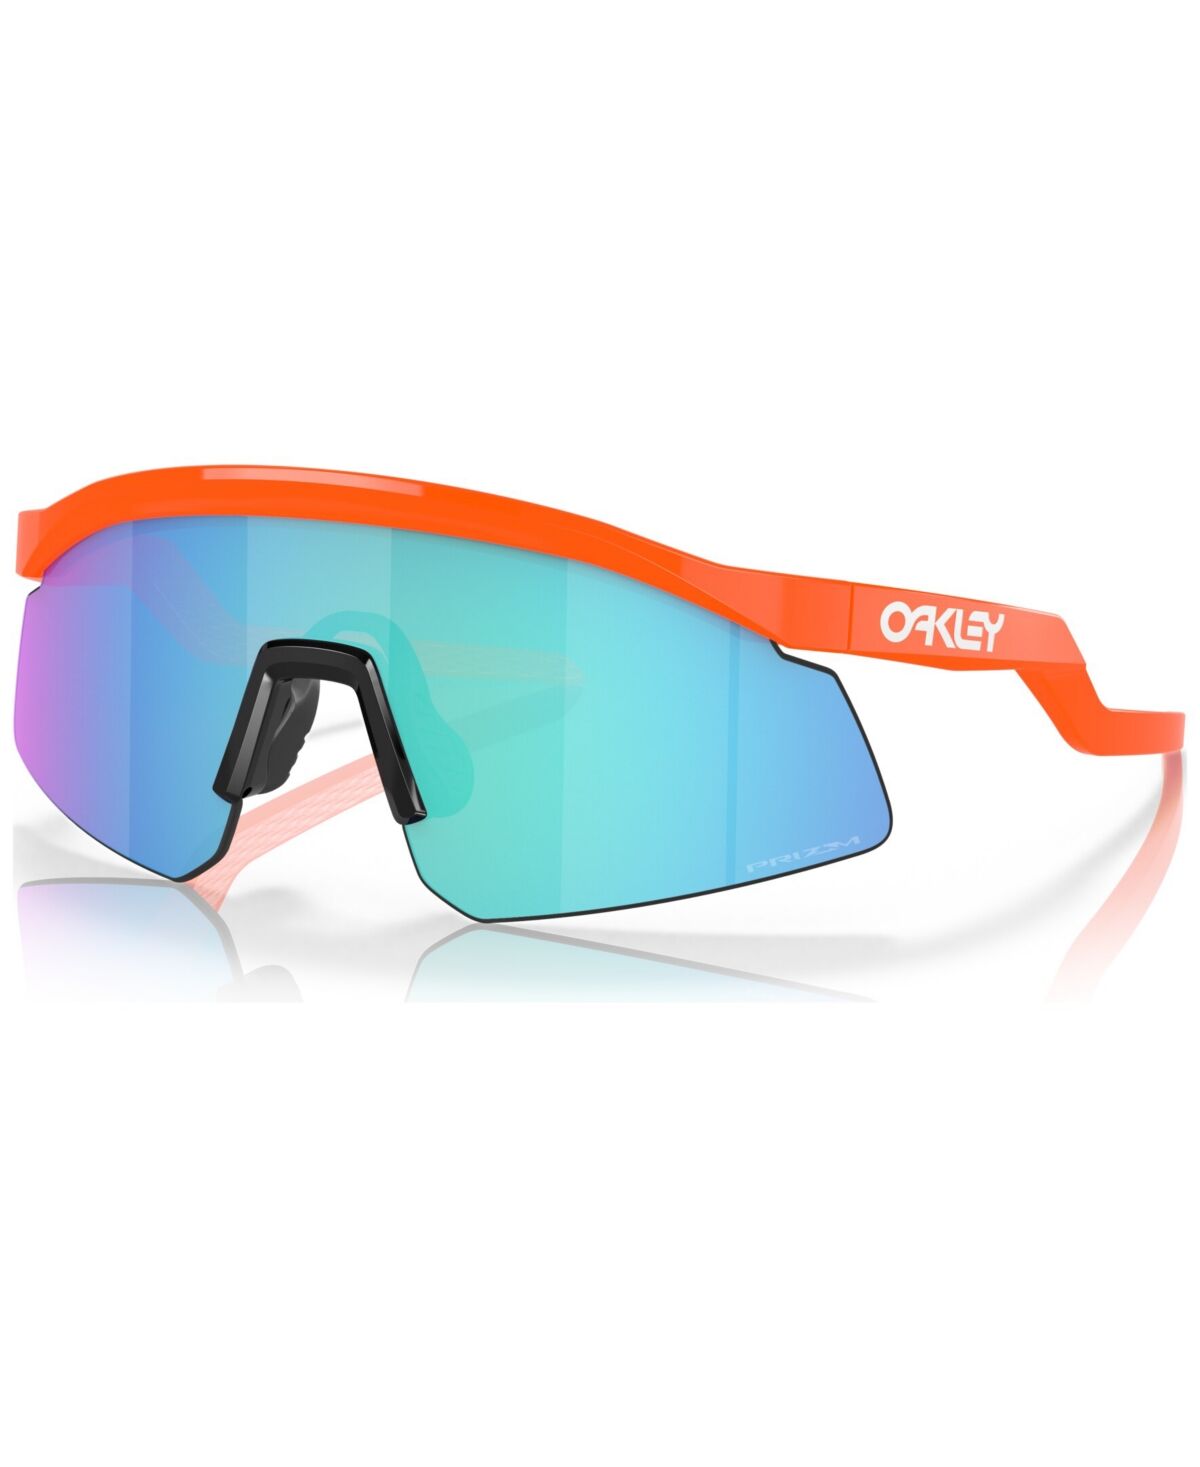 Oakley Men's Sunglasses, OO9229-0137 - Neon Orange